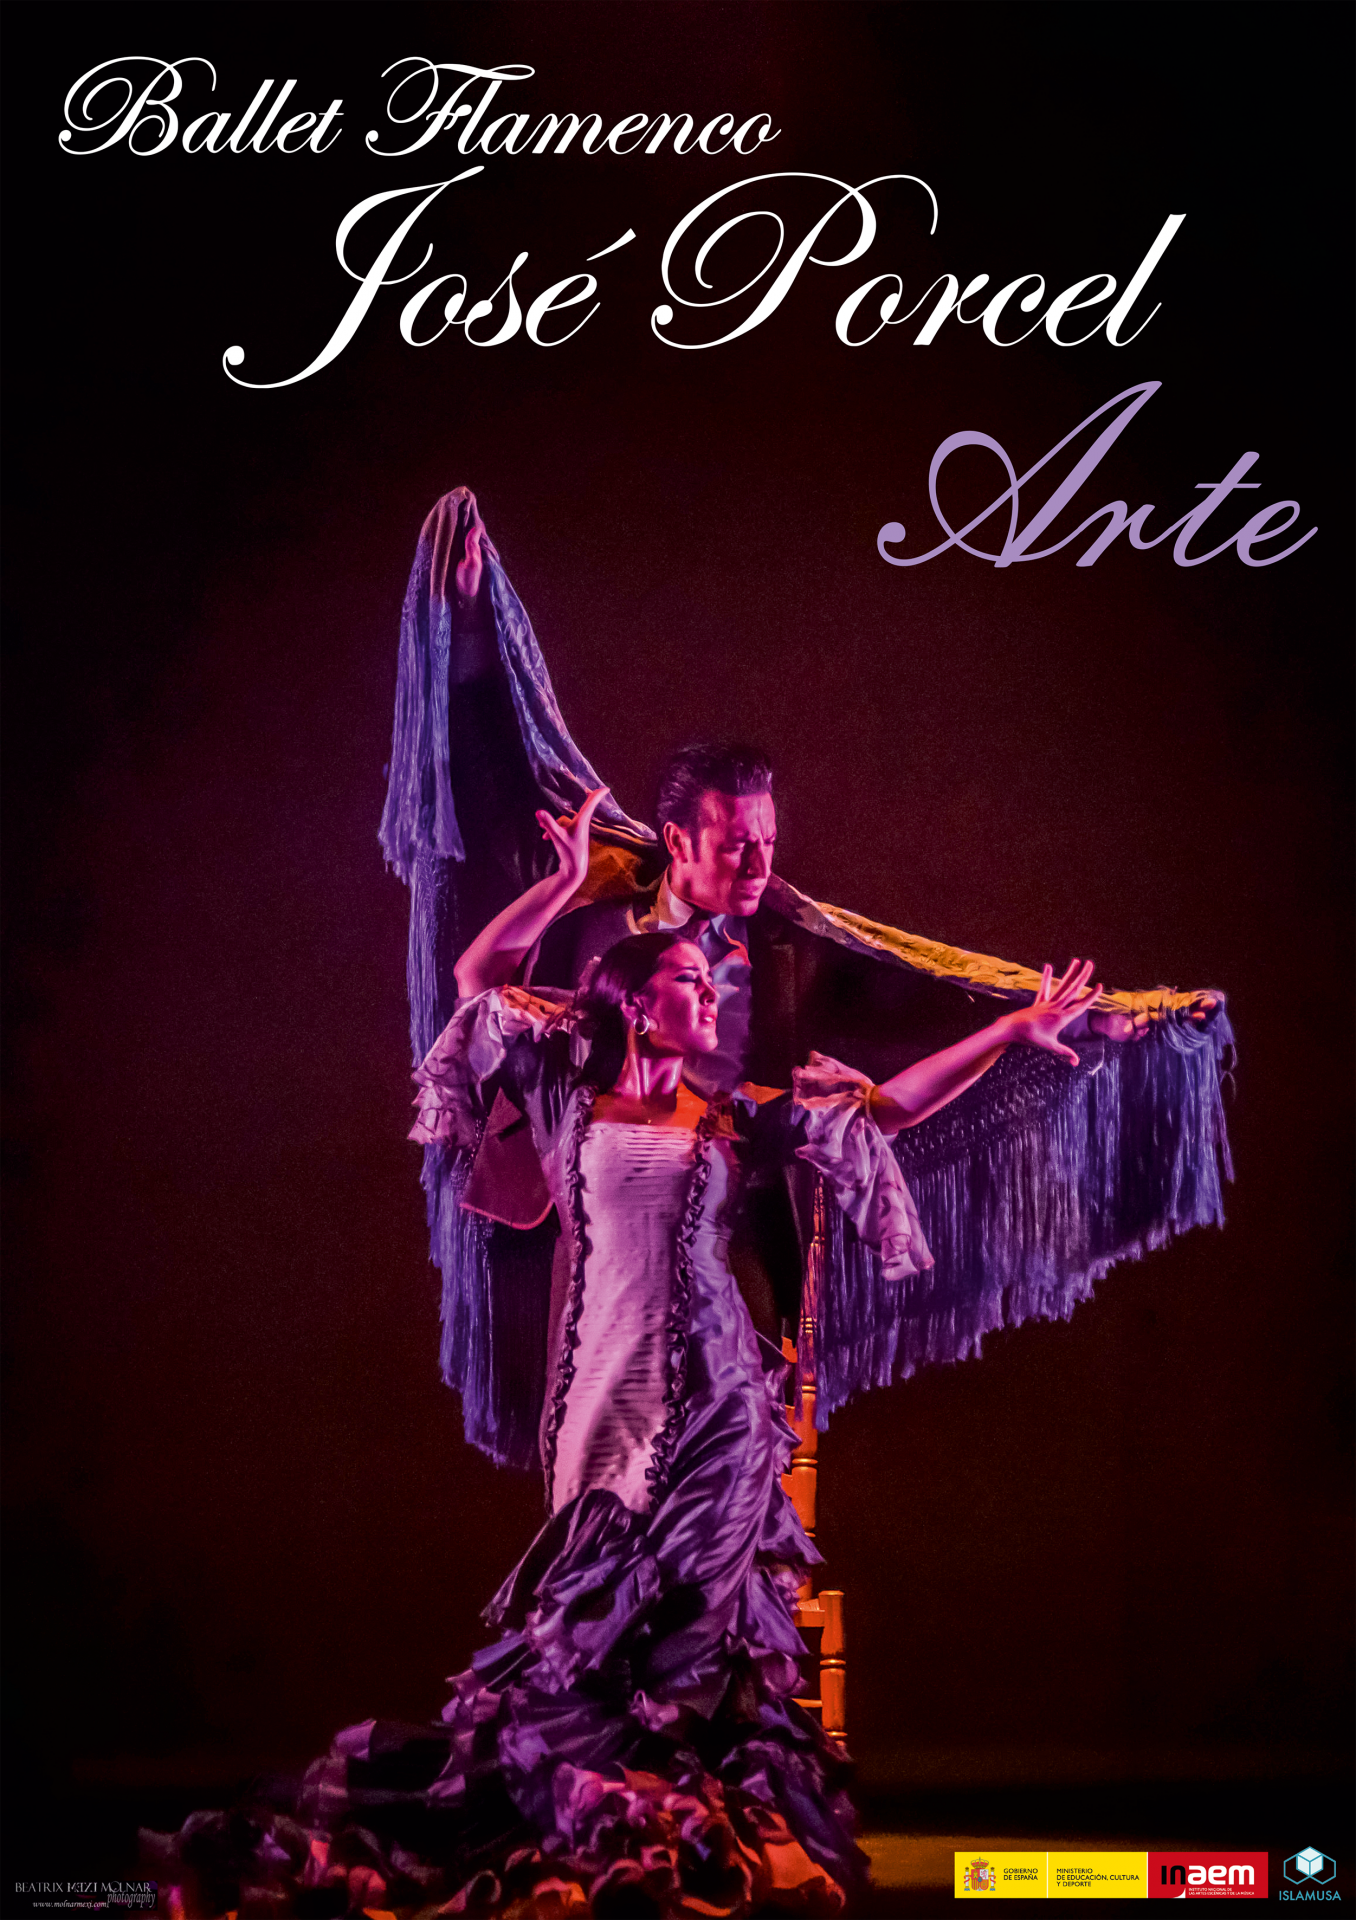 Ballet Flamenco José Porcel: 